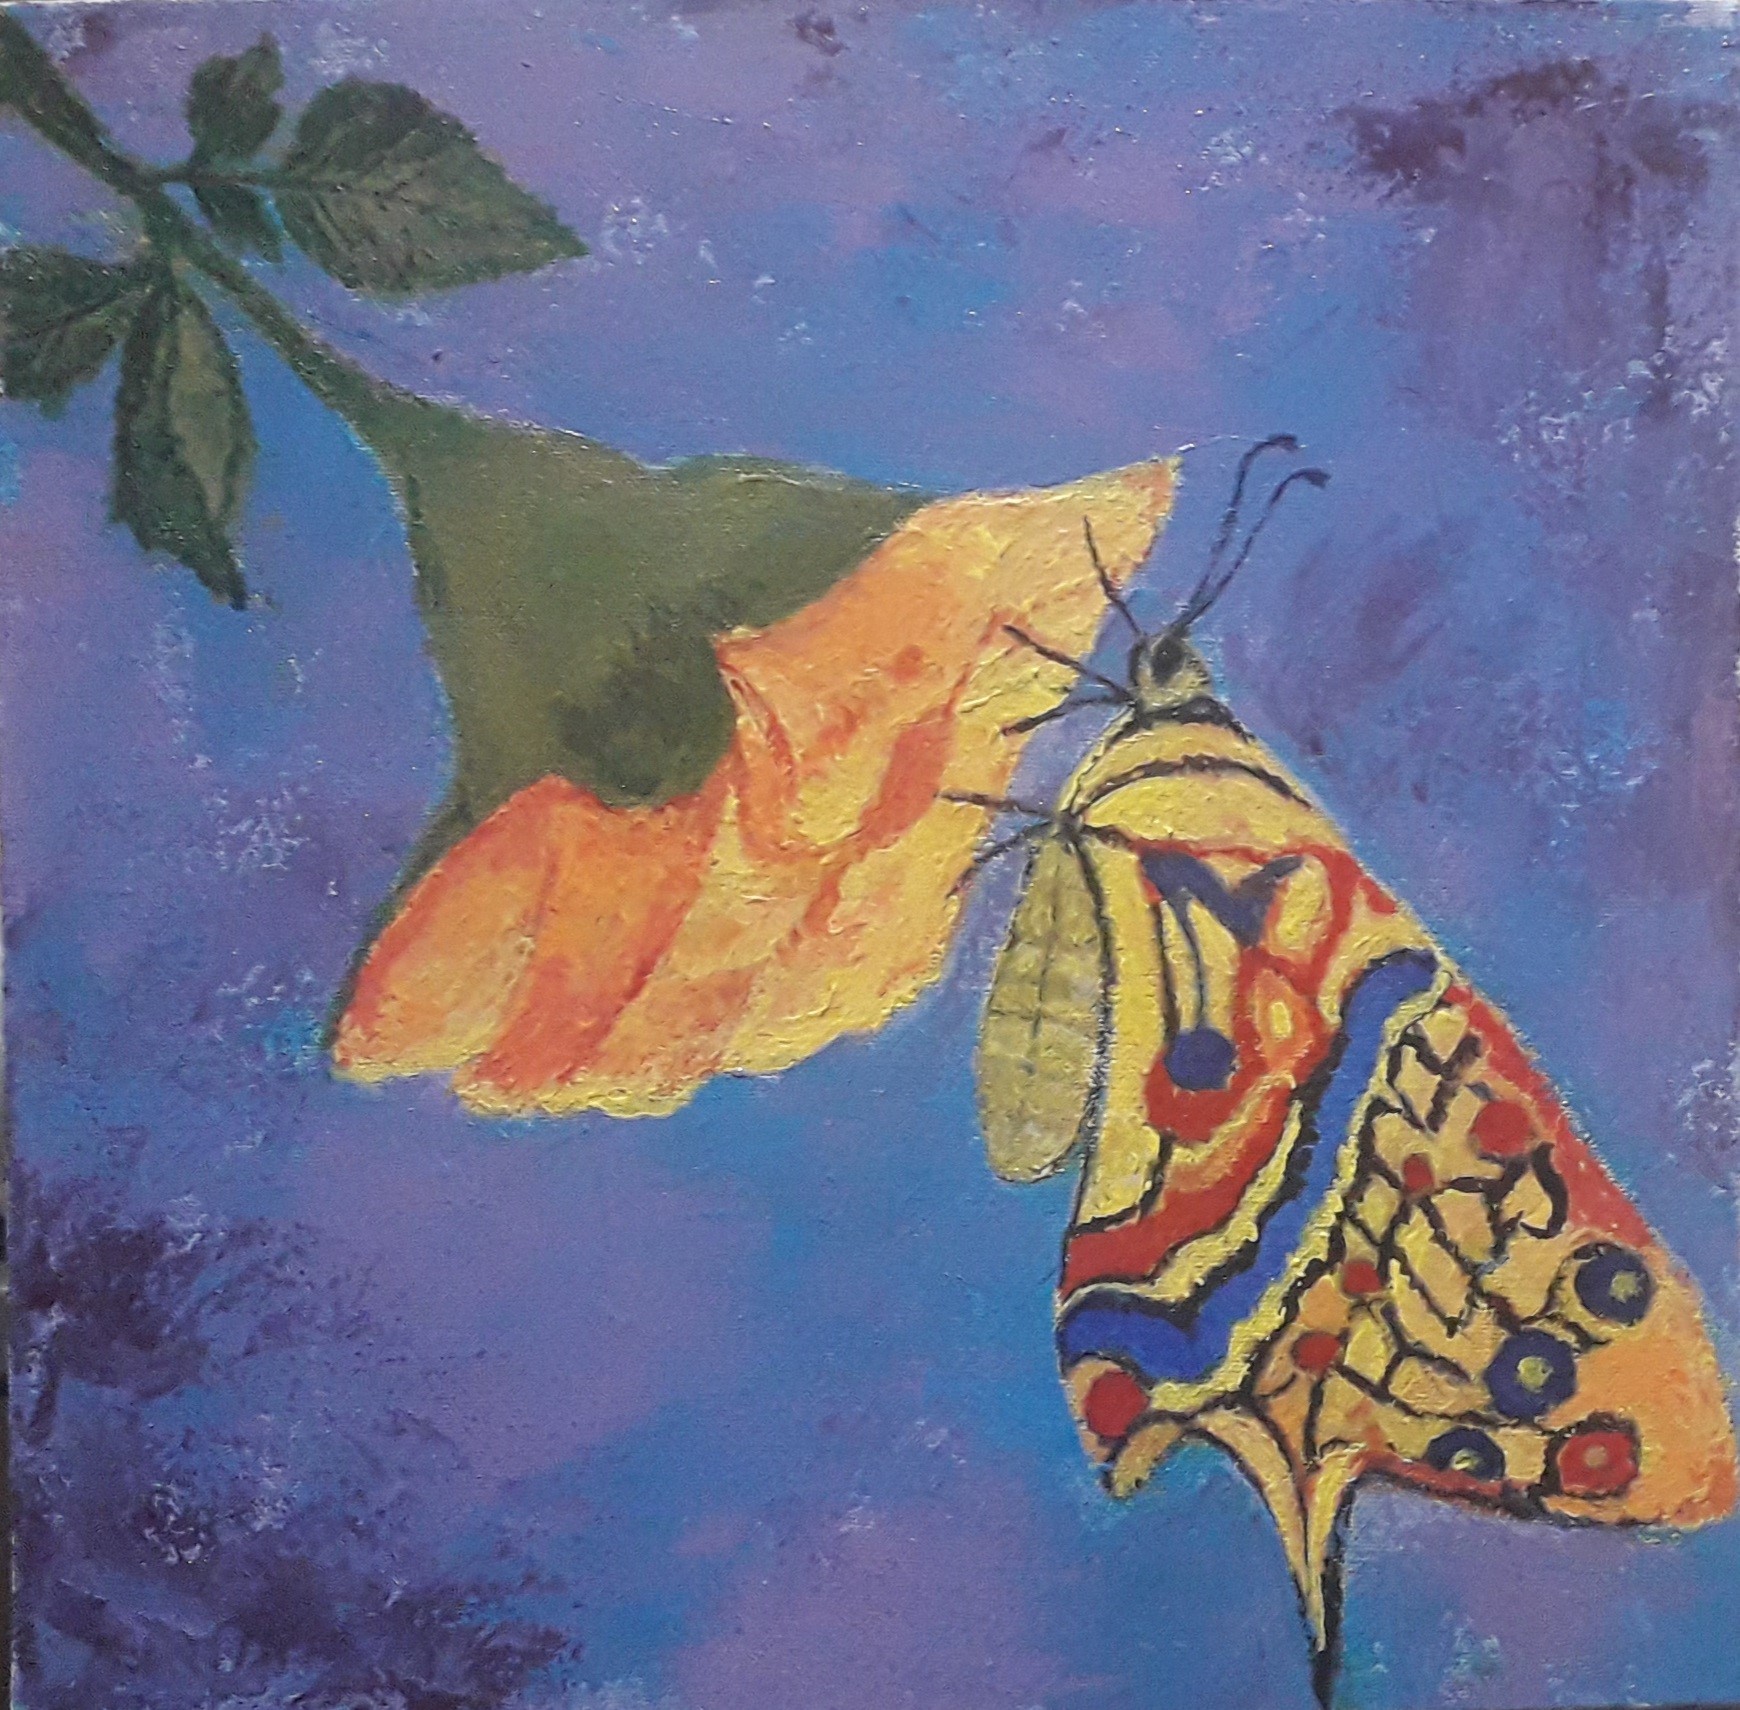 Butterfly & Flower by Simpson David